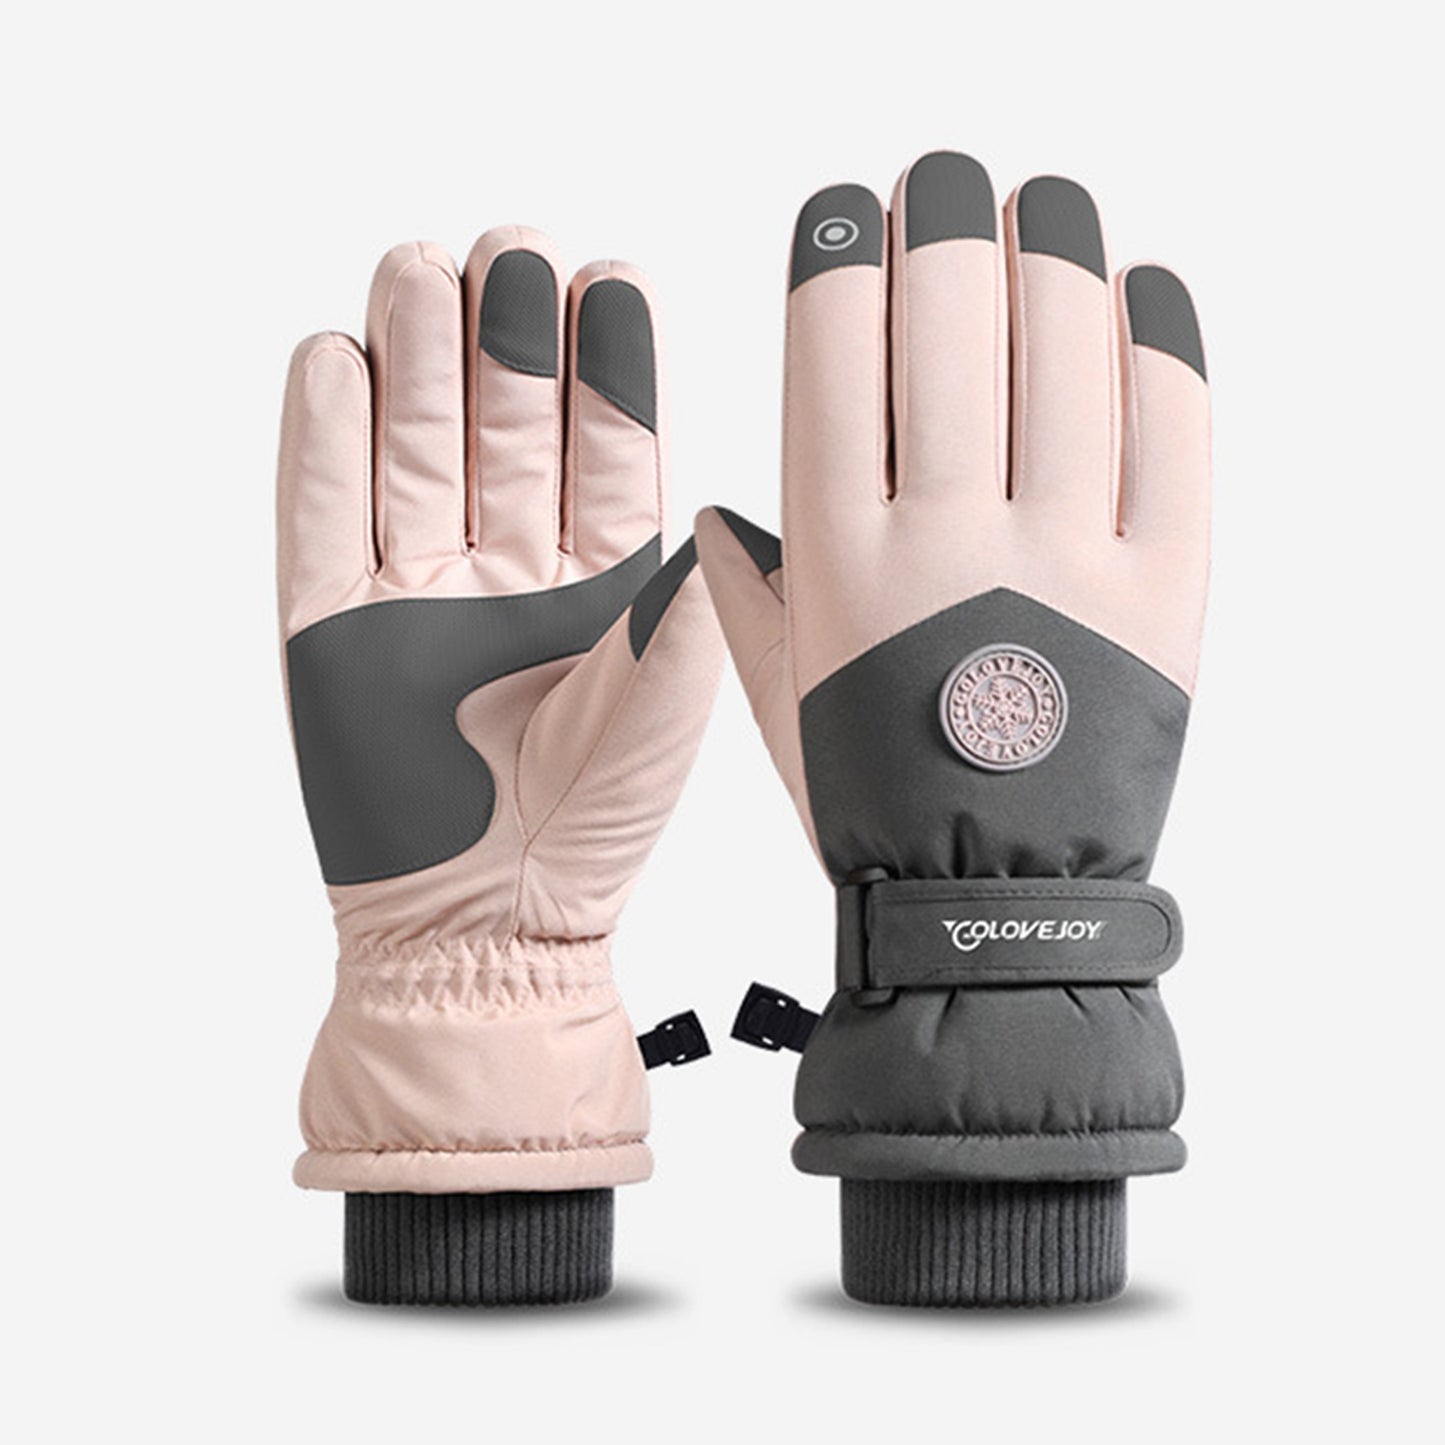 Winter Outdoor Thermal Velvet Fleece Lining Waterproof Anti Slip Touch Screen Ski Gloves